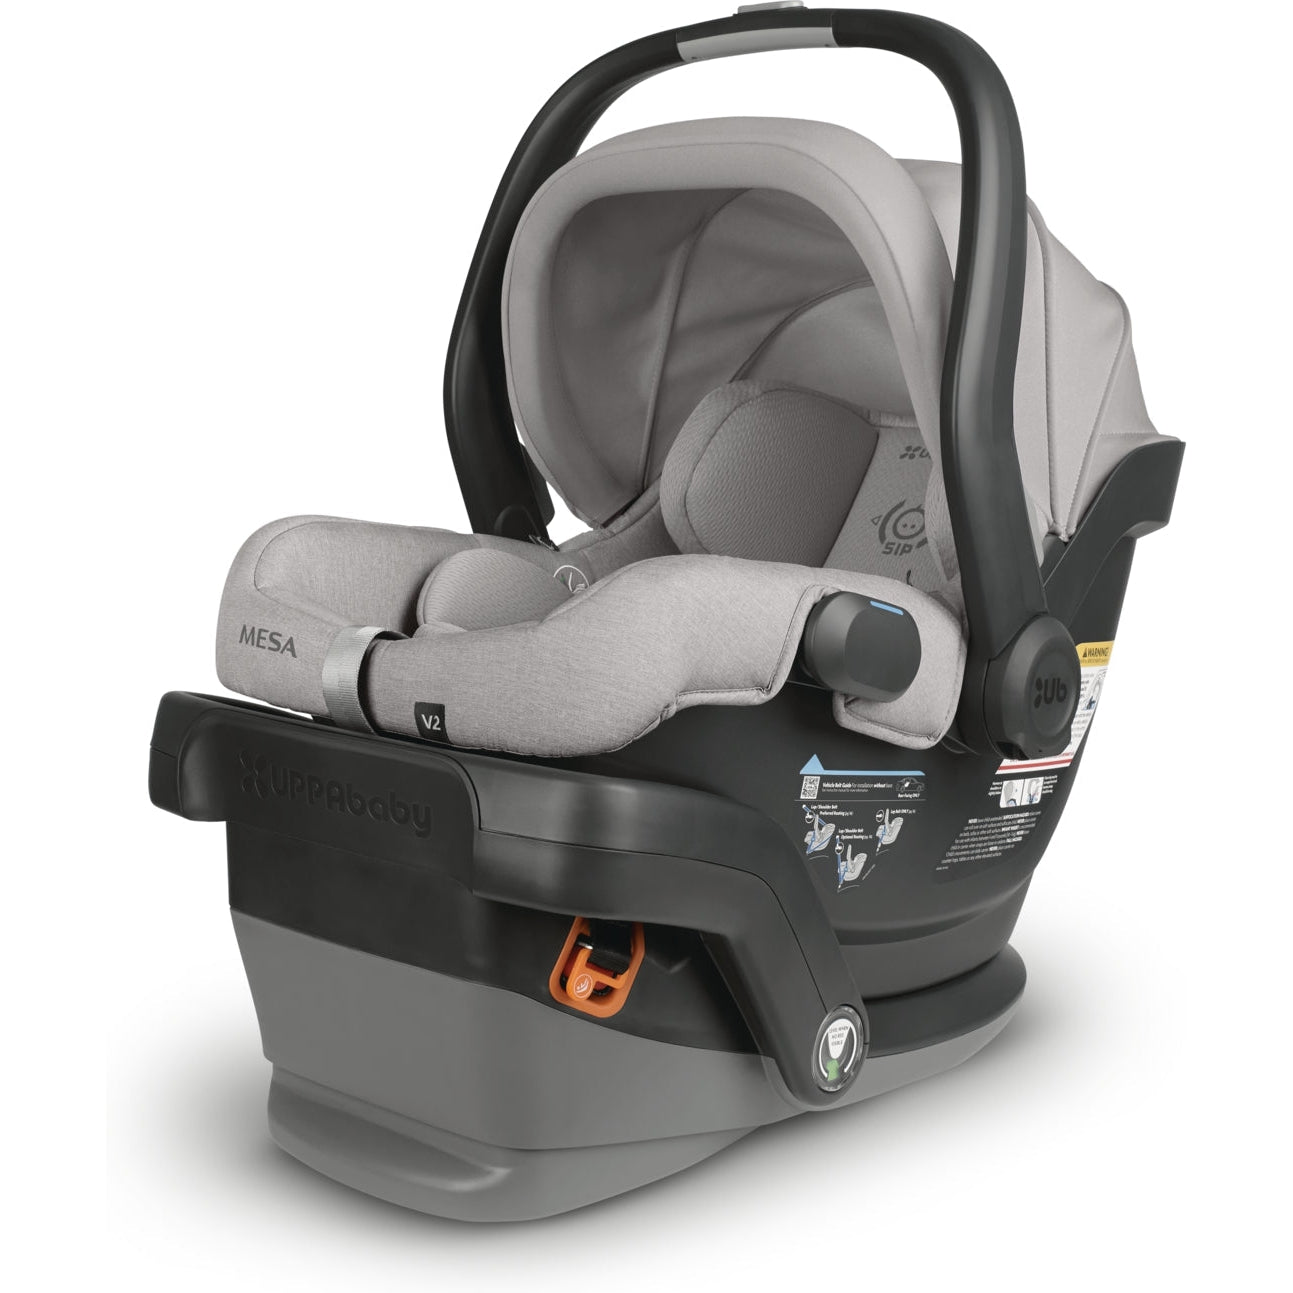 Buy stella-grey-melange UPPAbaby Mesa V2 Infant Car Seat + Base